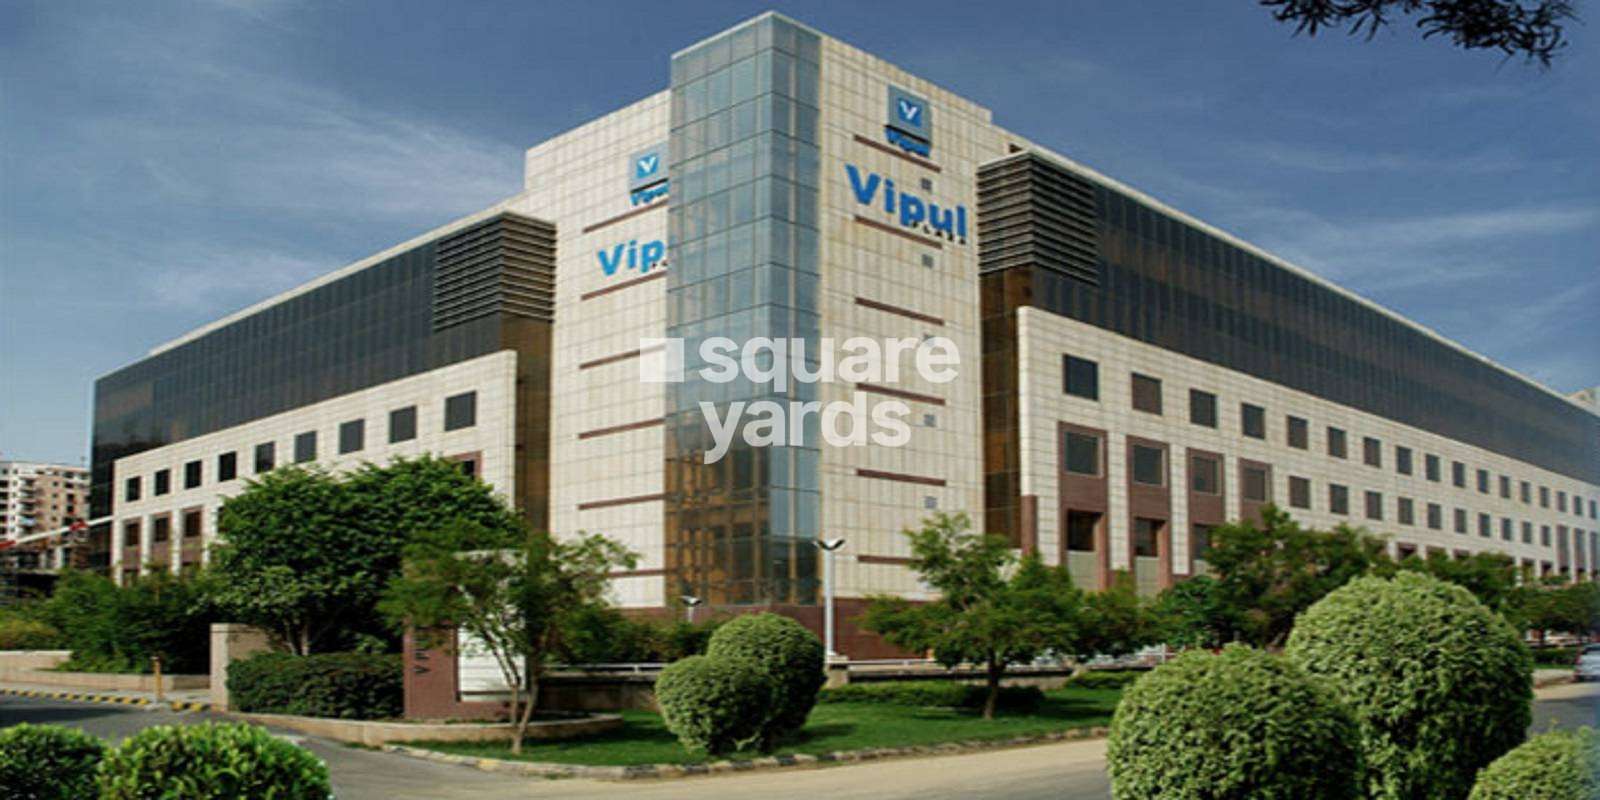 Vipul Plaza Cover Image